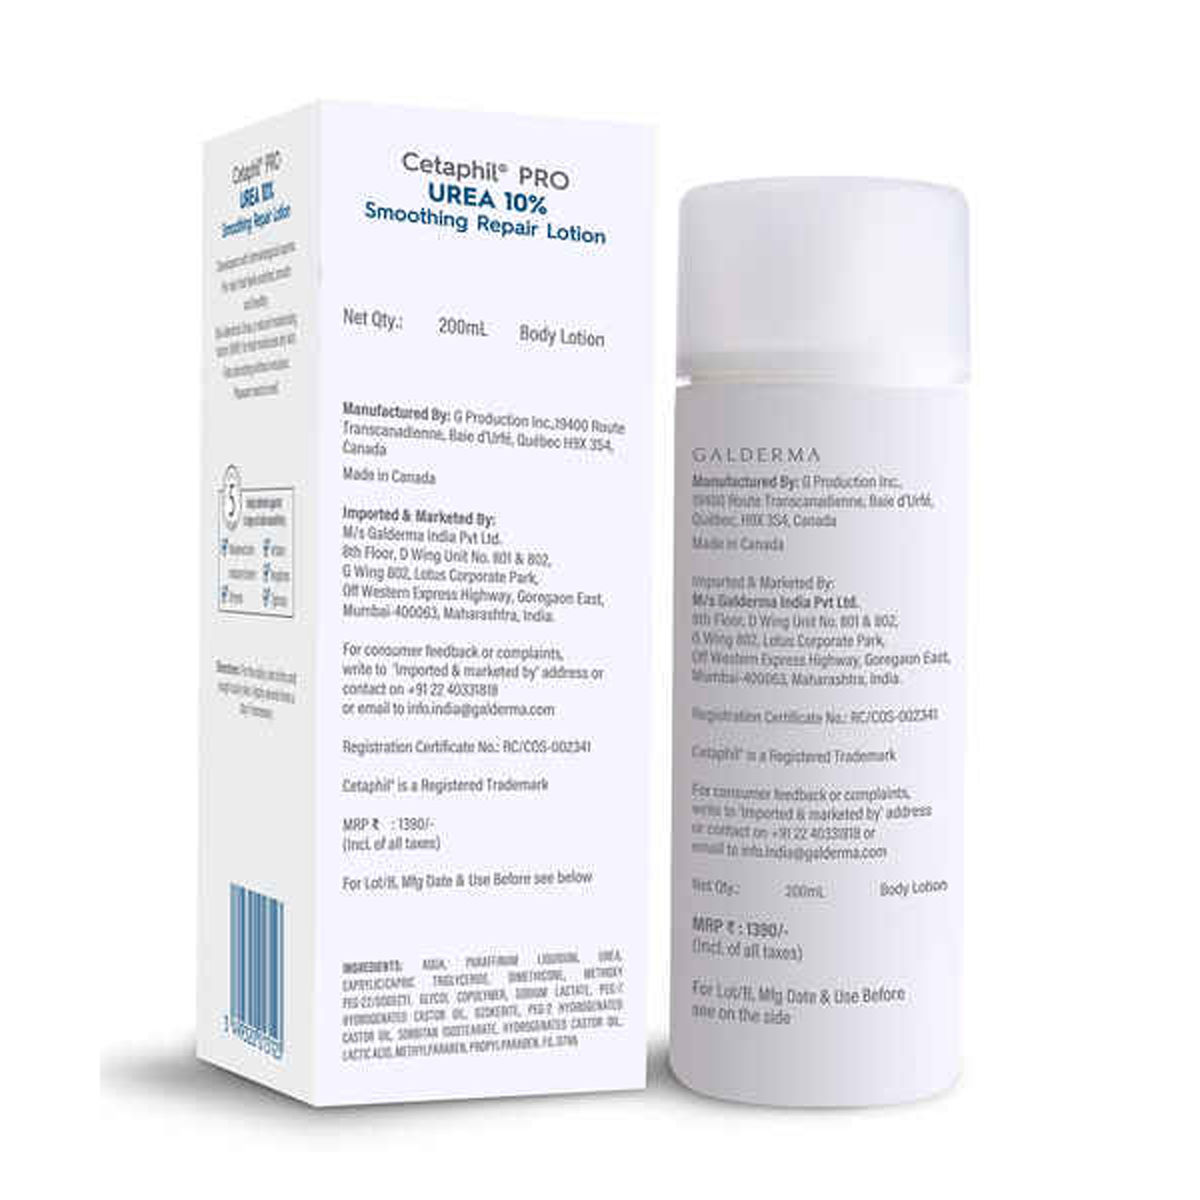 Cetaphil Pro Urea 10% Smoothing Repair Lotion, 200 ml, Pack of 1 